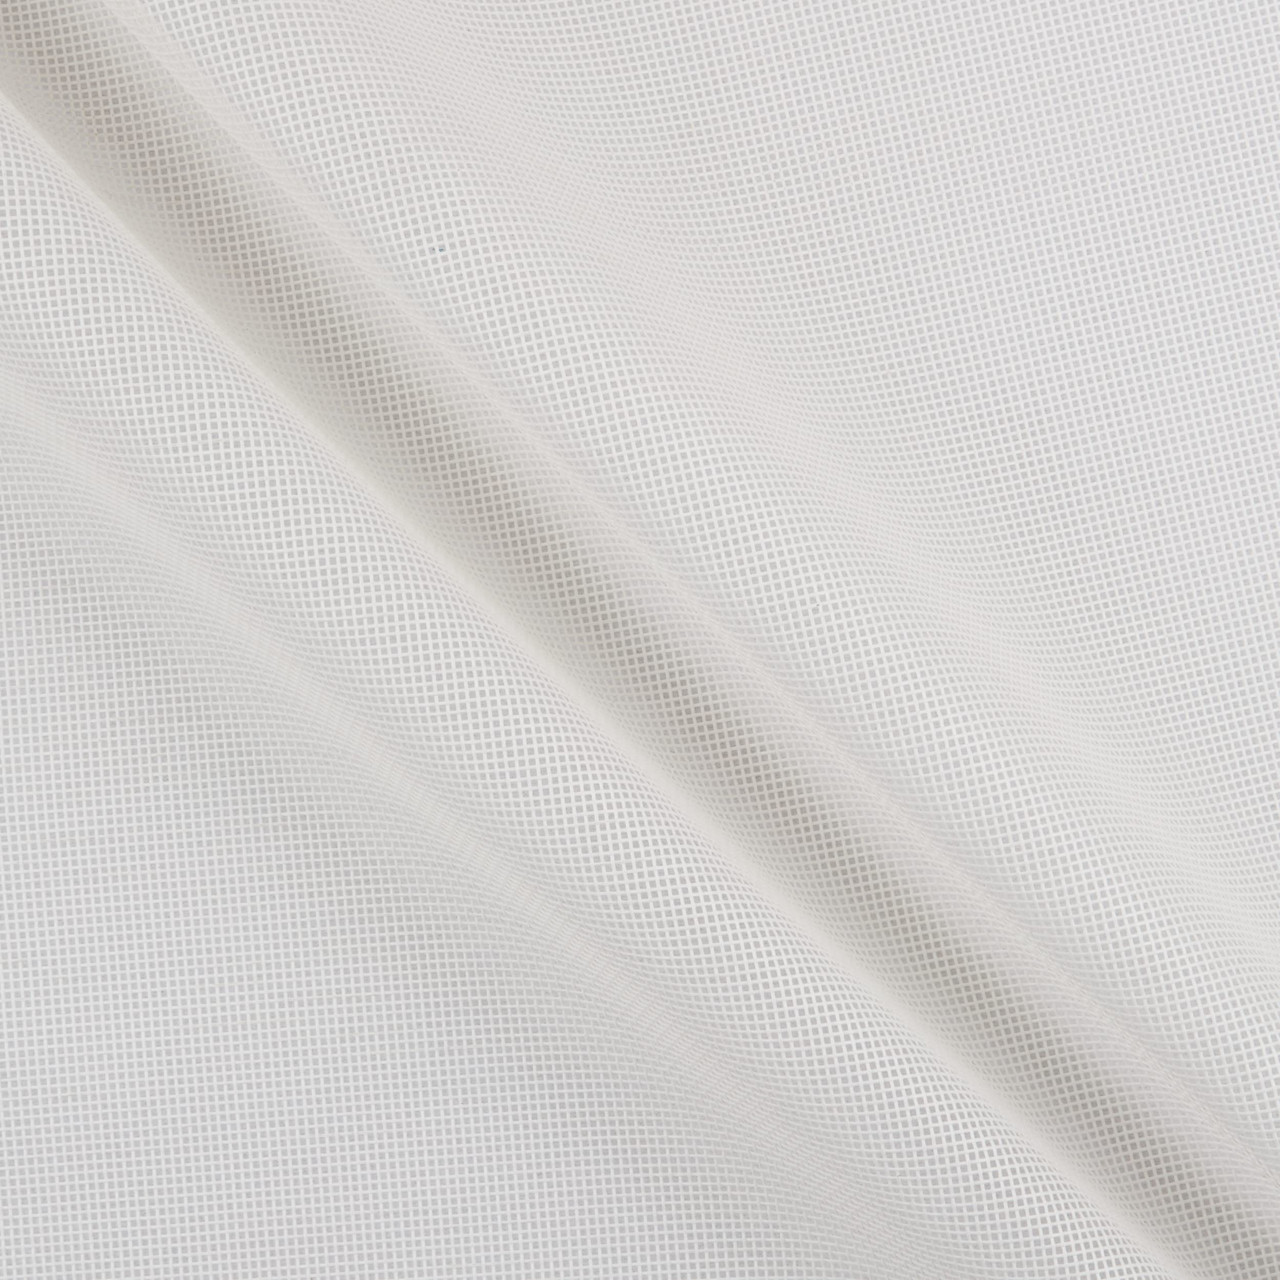 911 Mesh Outdoor 6 White Fabric by the Yard, Medium/Heavyweight Sling,  Outdoor, Mesh Fabric, Home Decor Fabric